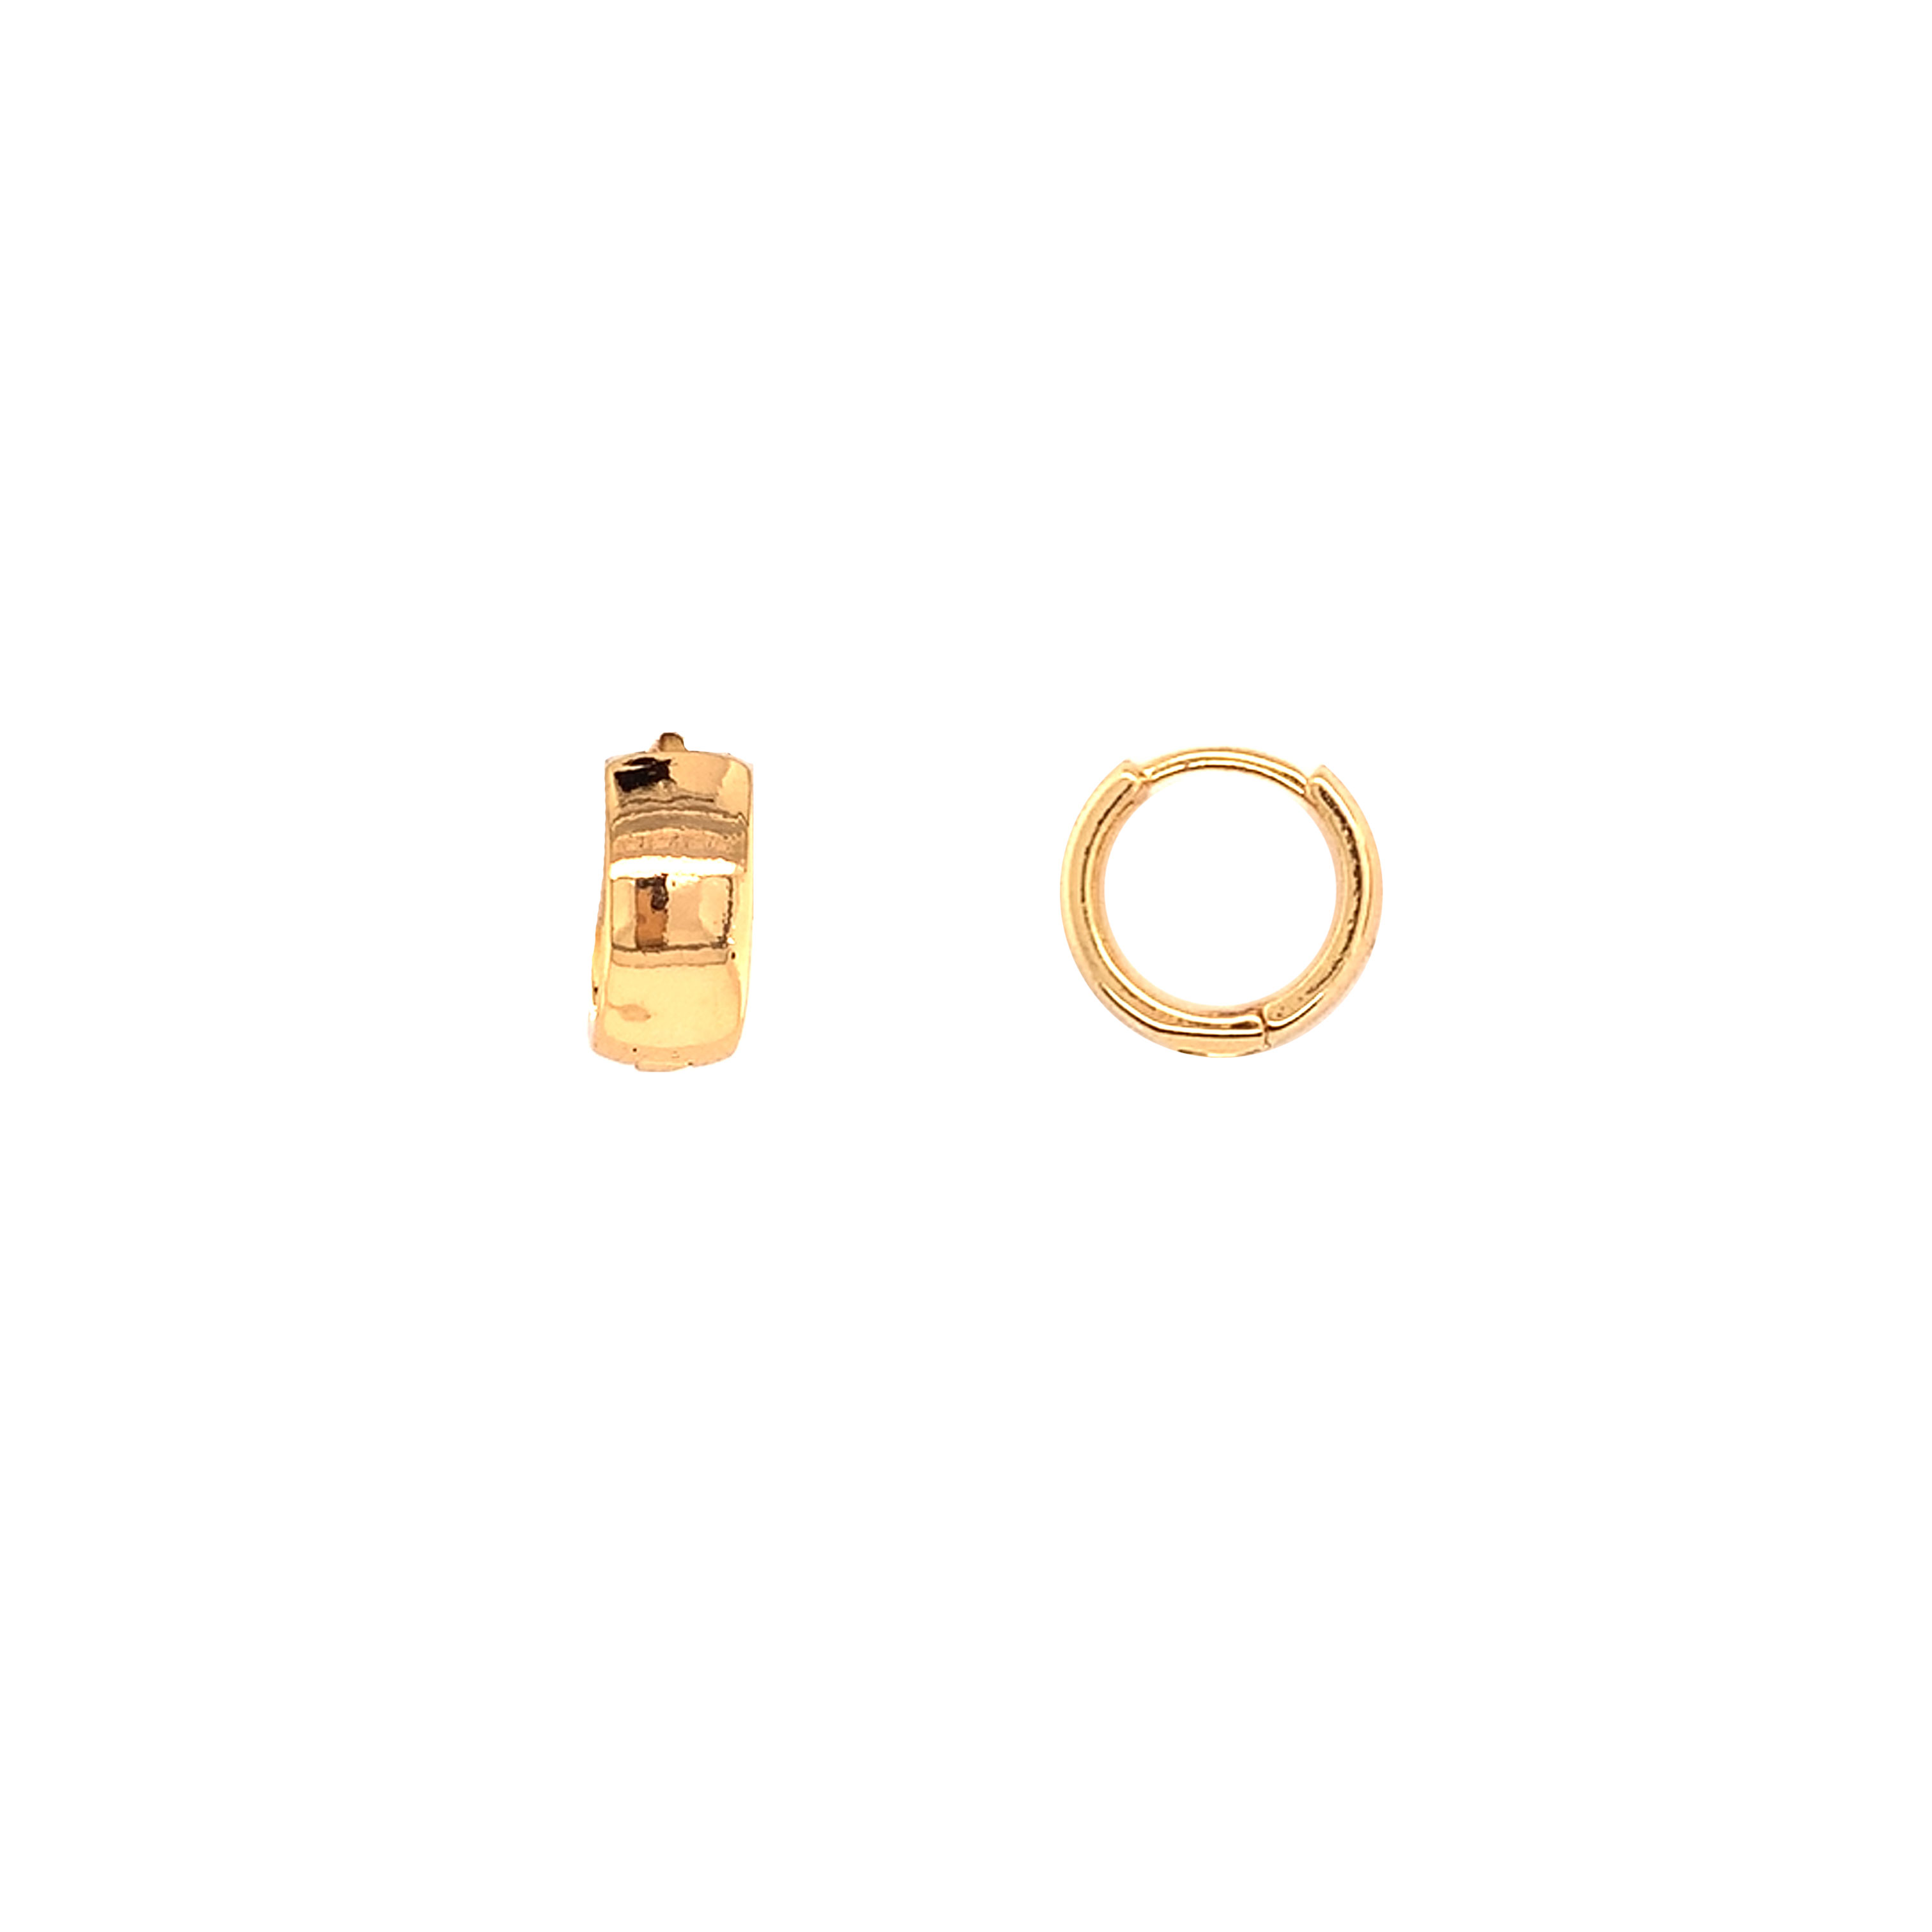 5mm x 12mm Mini Hoops - Gold Filled